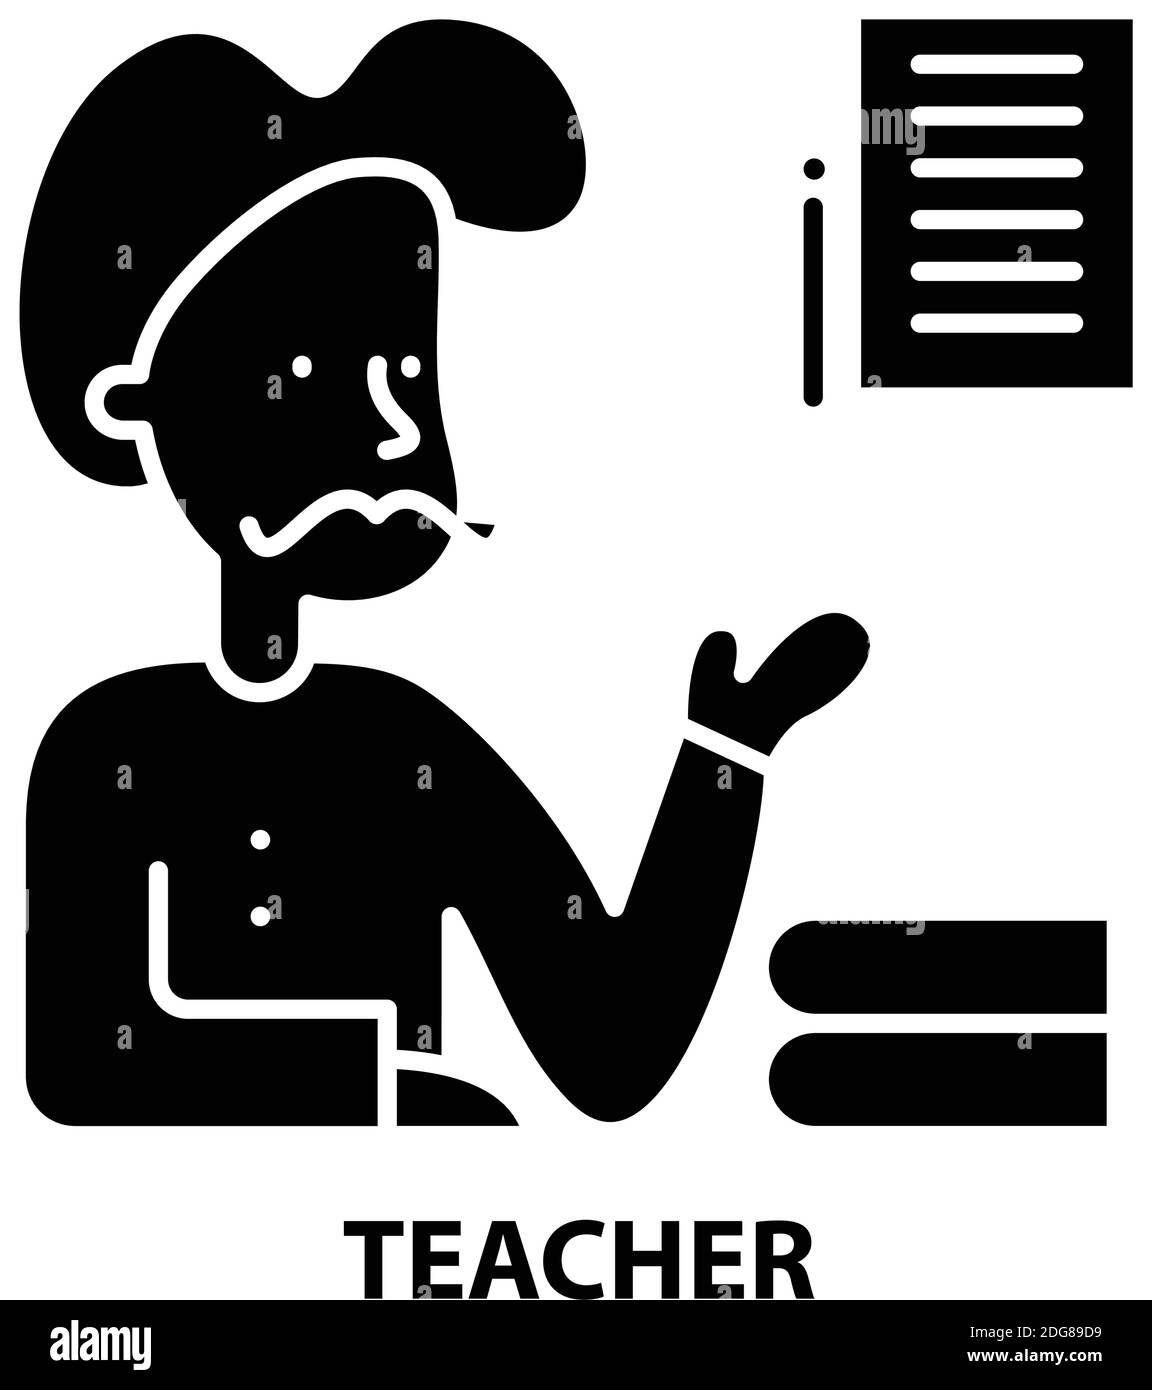 teacher icon, black vector sign with editable strokes, concept illustration Stock Vector